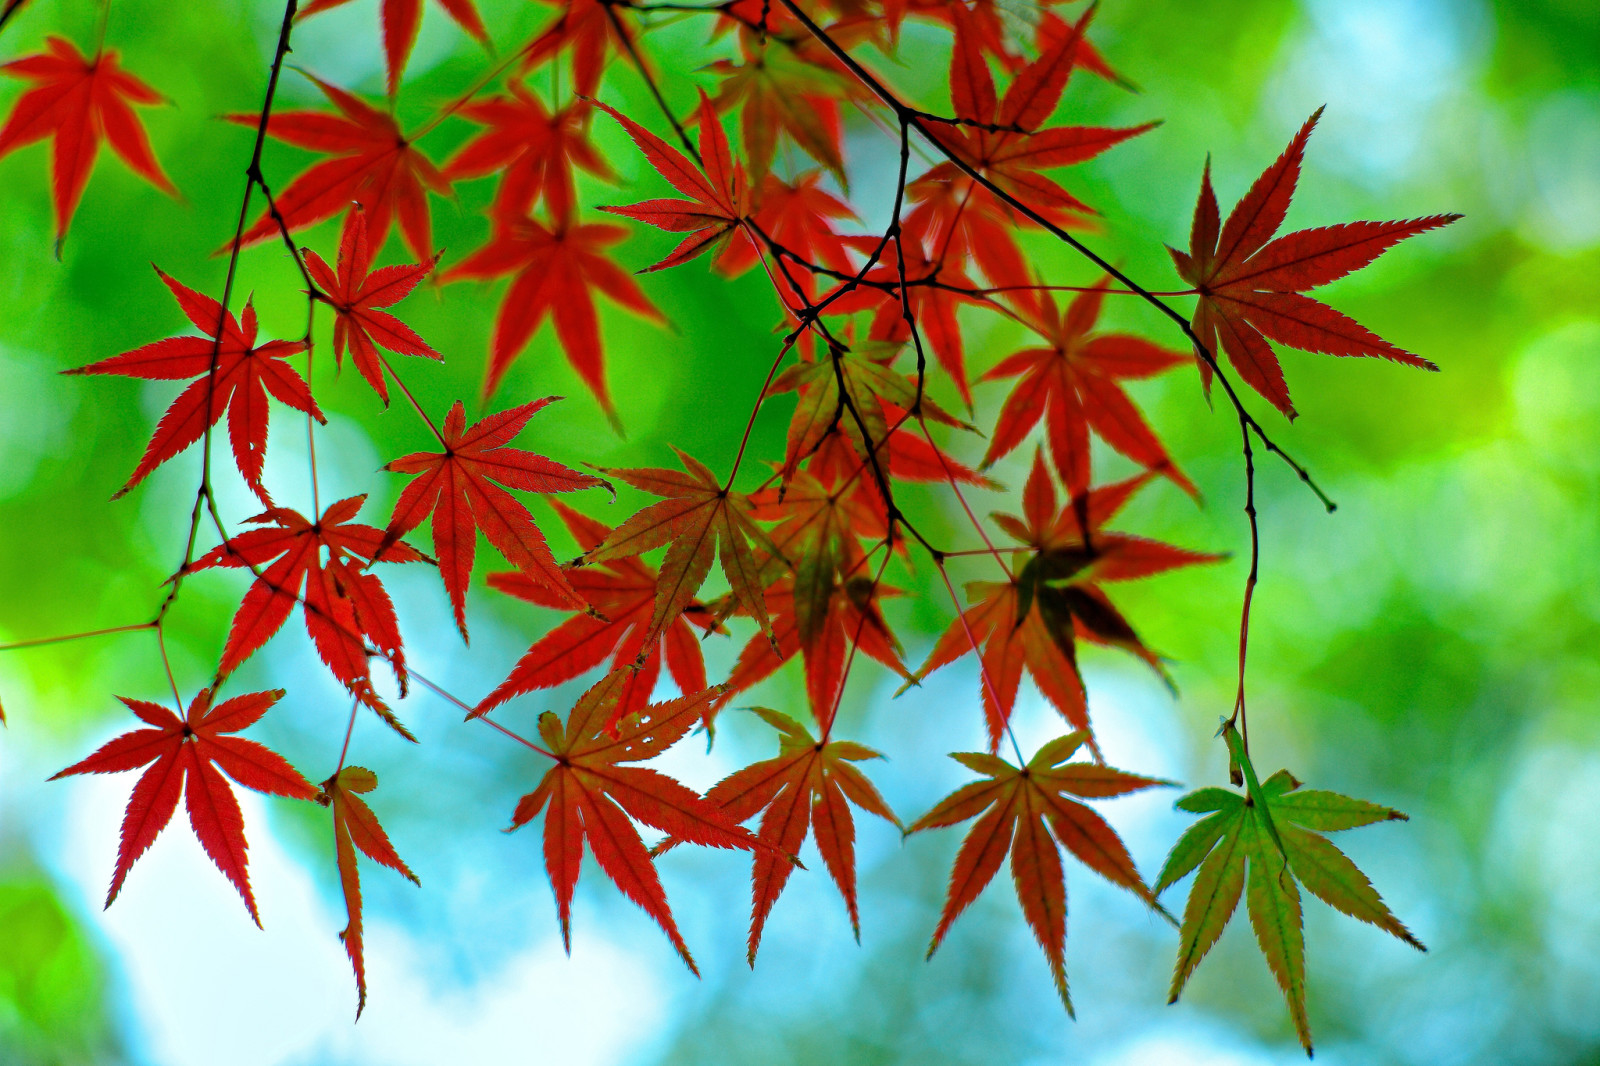 musim gugur, Daun-daun, cabang, maple, Merah tua